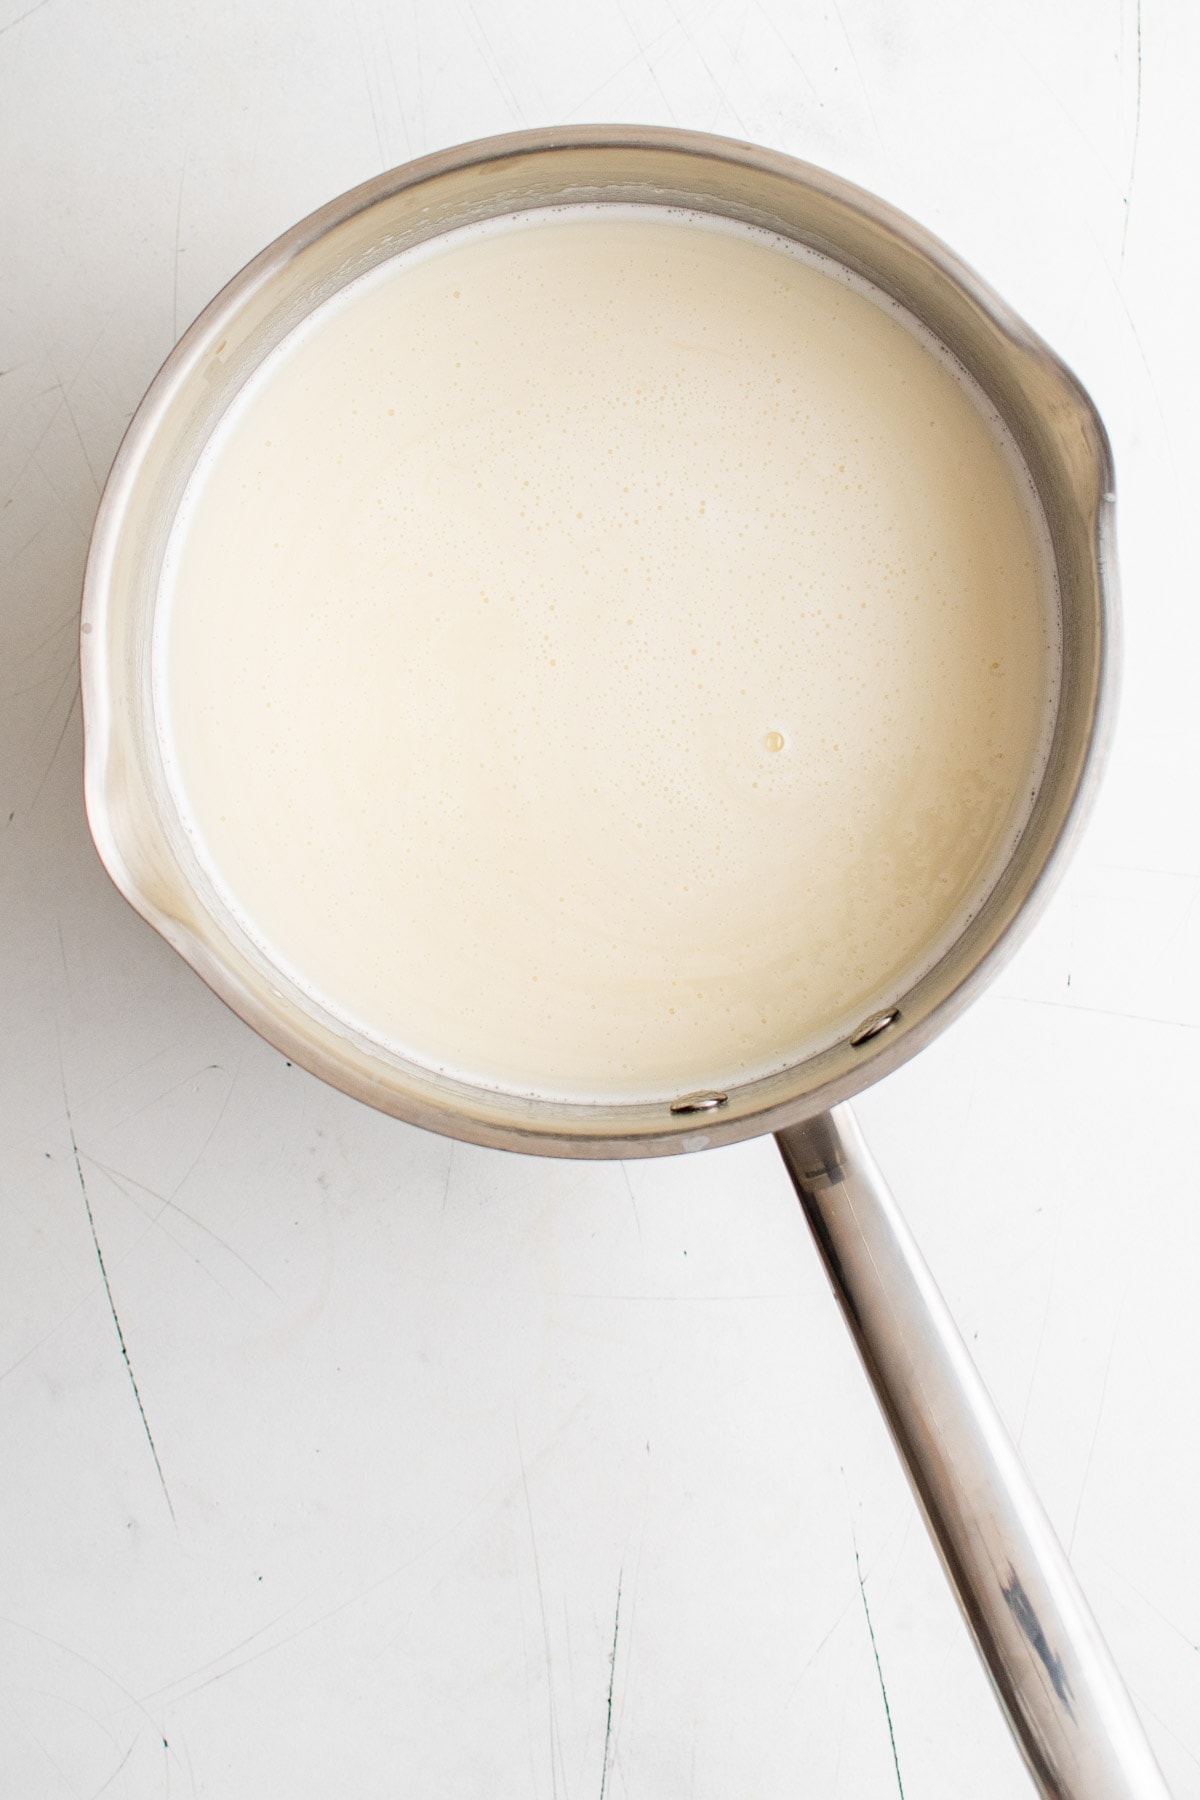 white hot chocolate in a saucepan